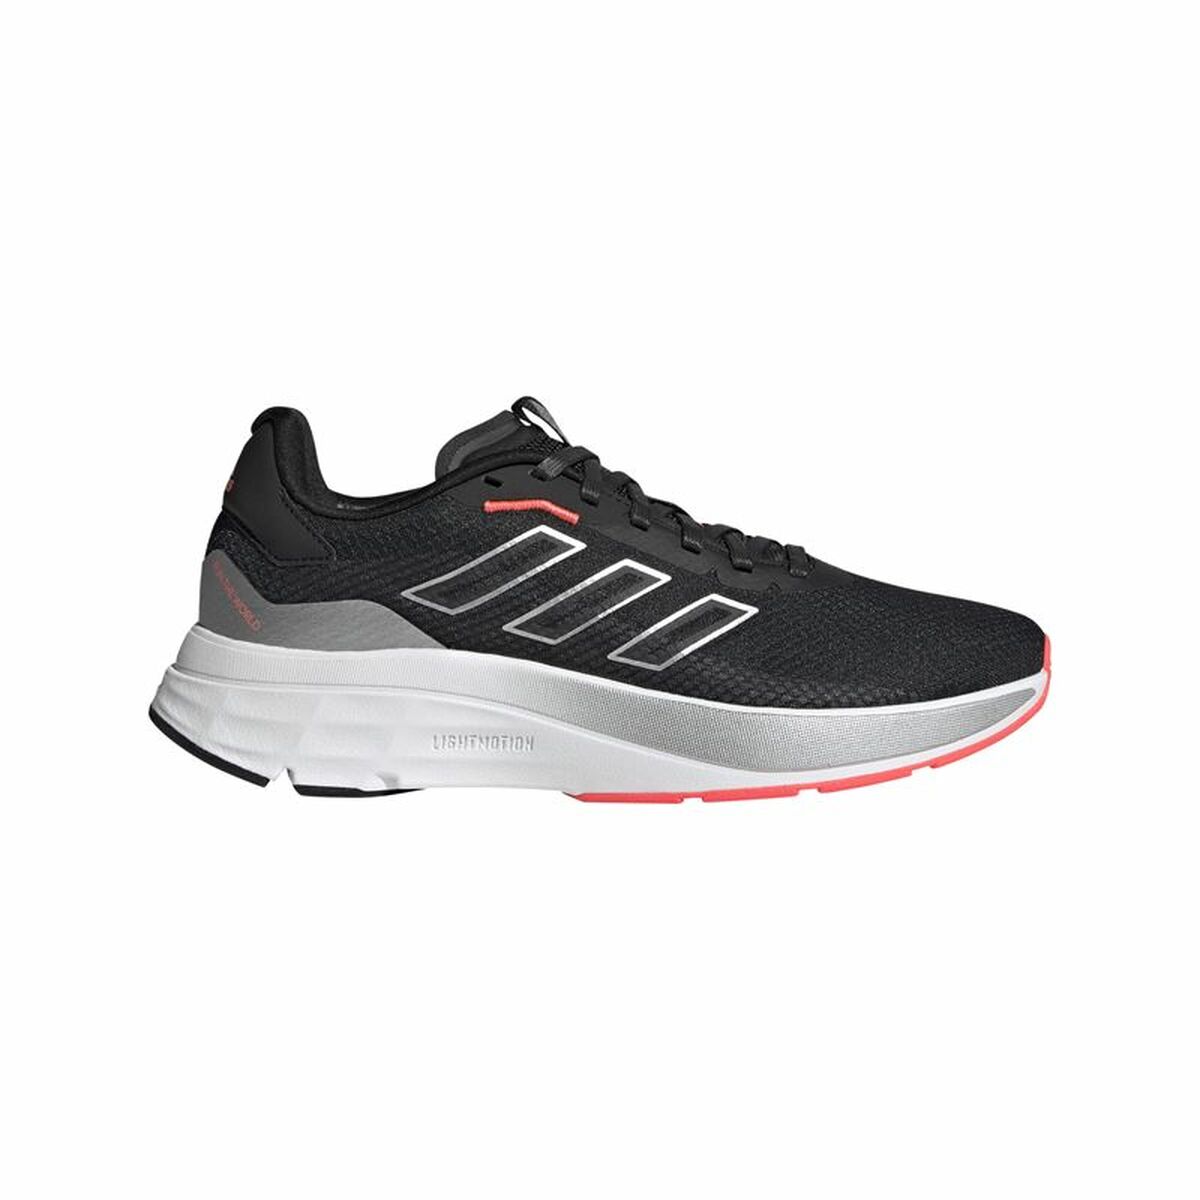 Chaussures de Running pour Adultes Adidas Speedmotion Femme Noir